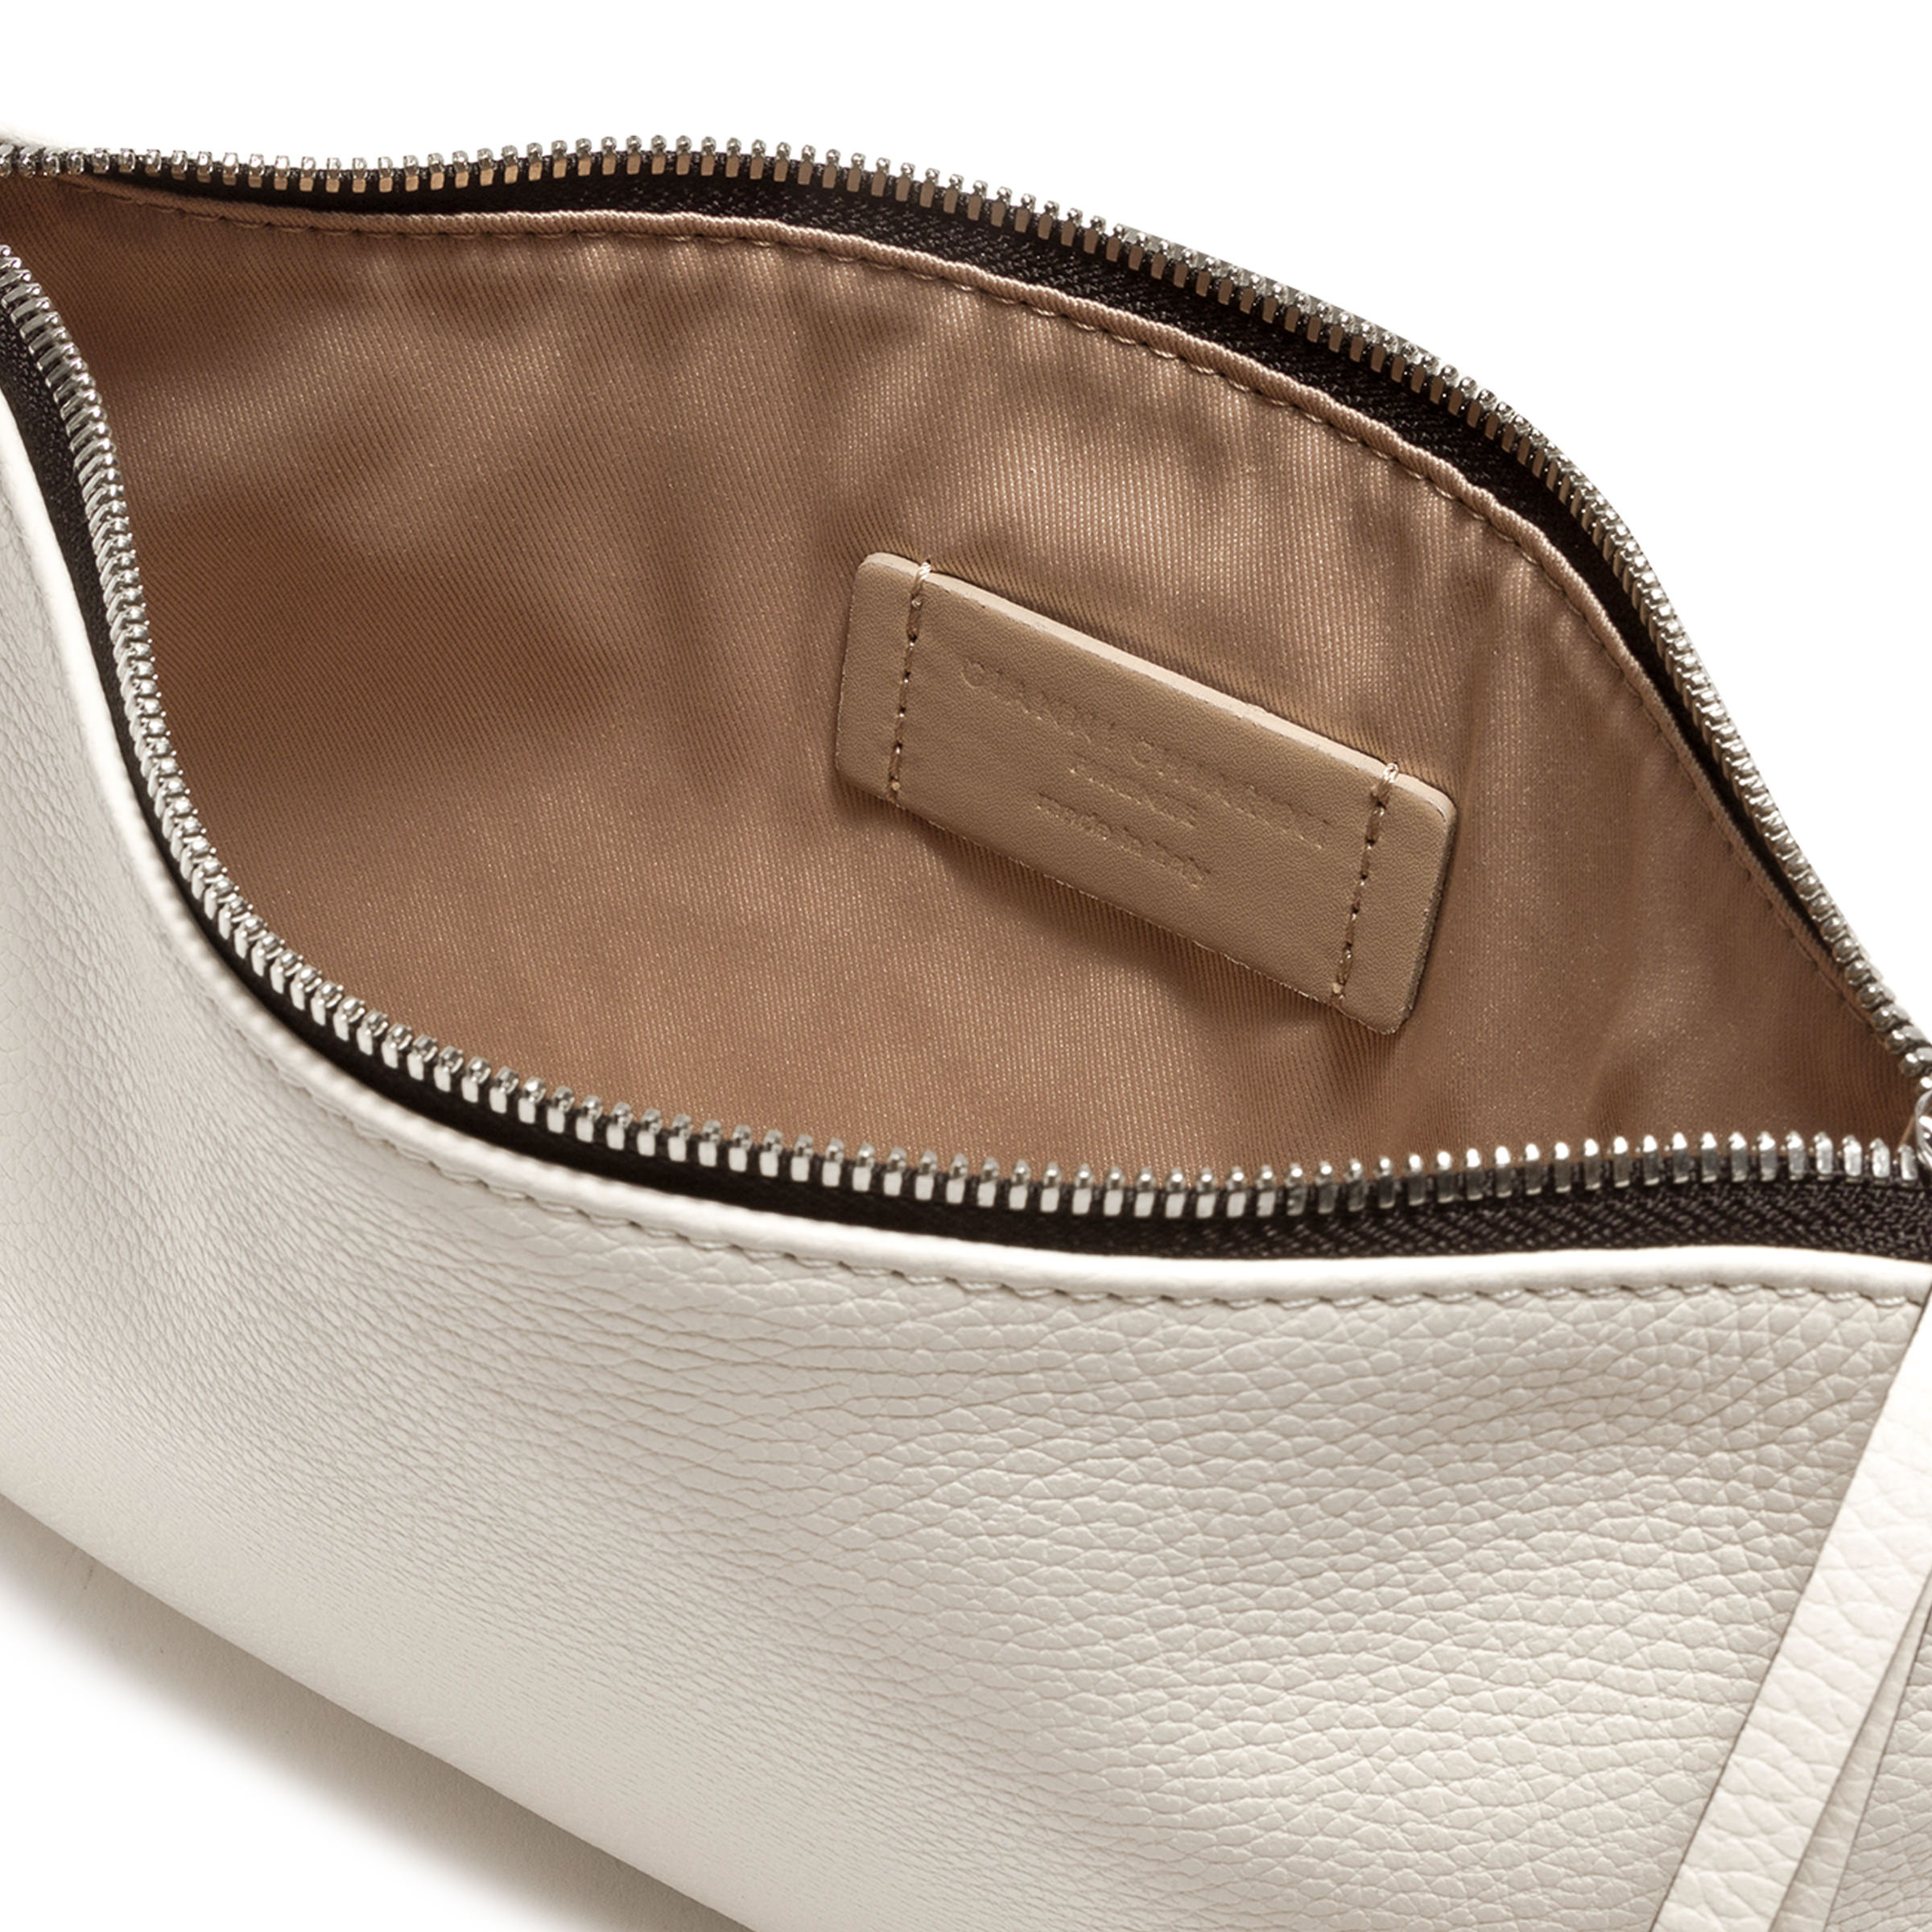 Gianni Chiarini - Hermy leather bag, White, large image number 4